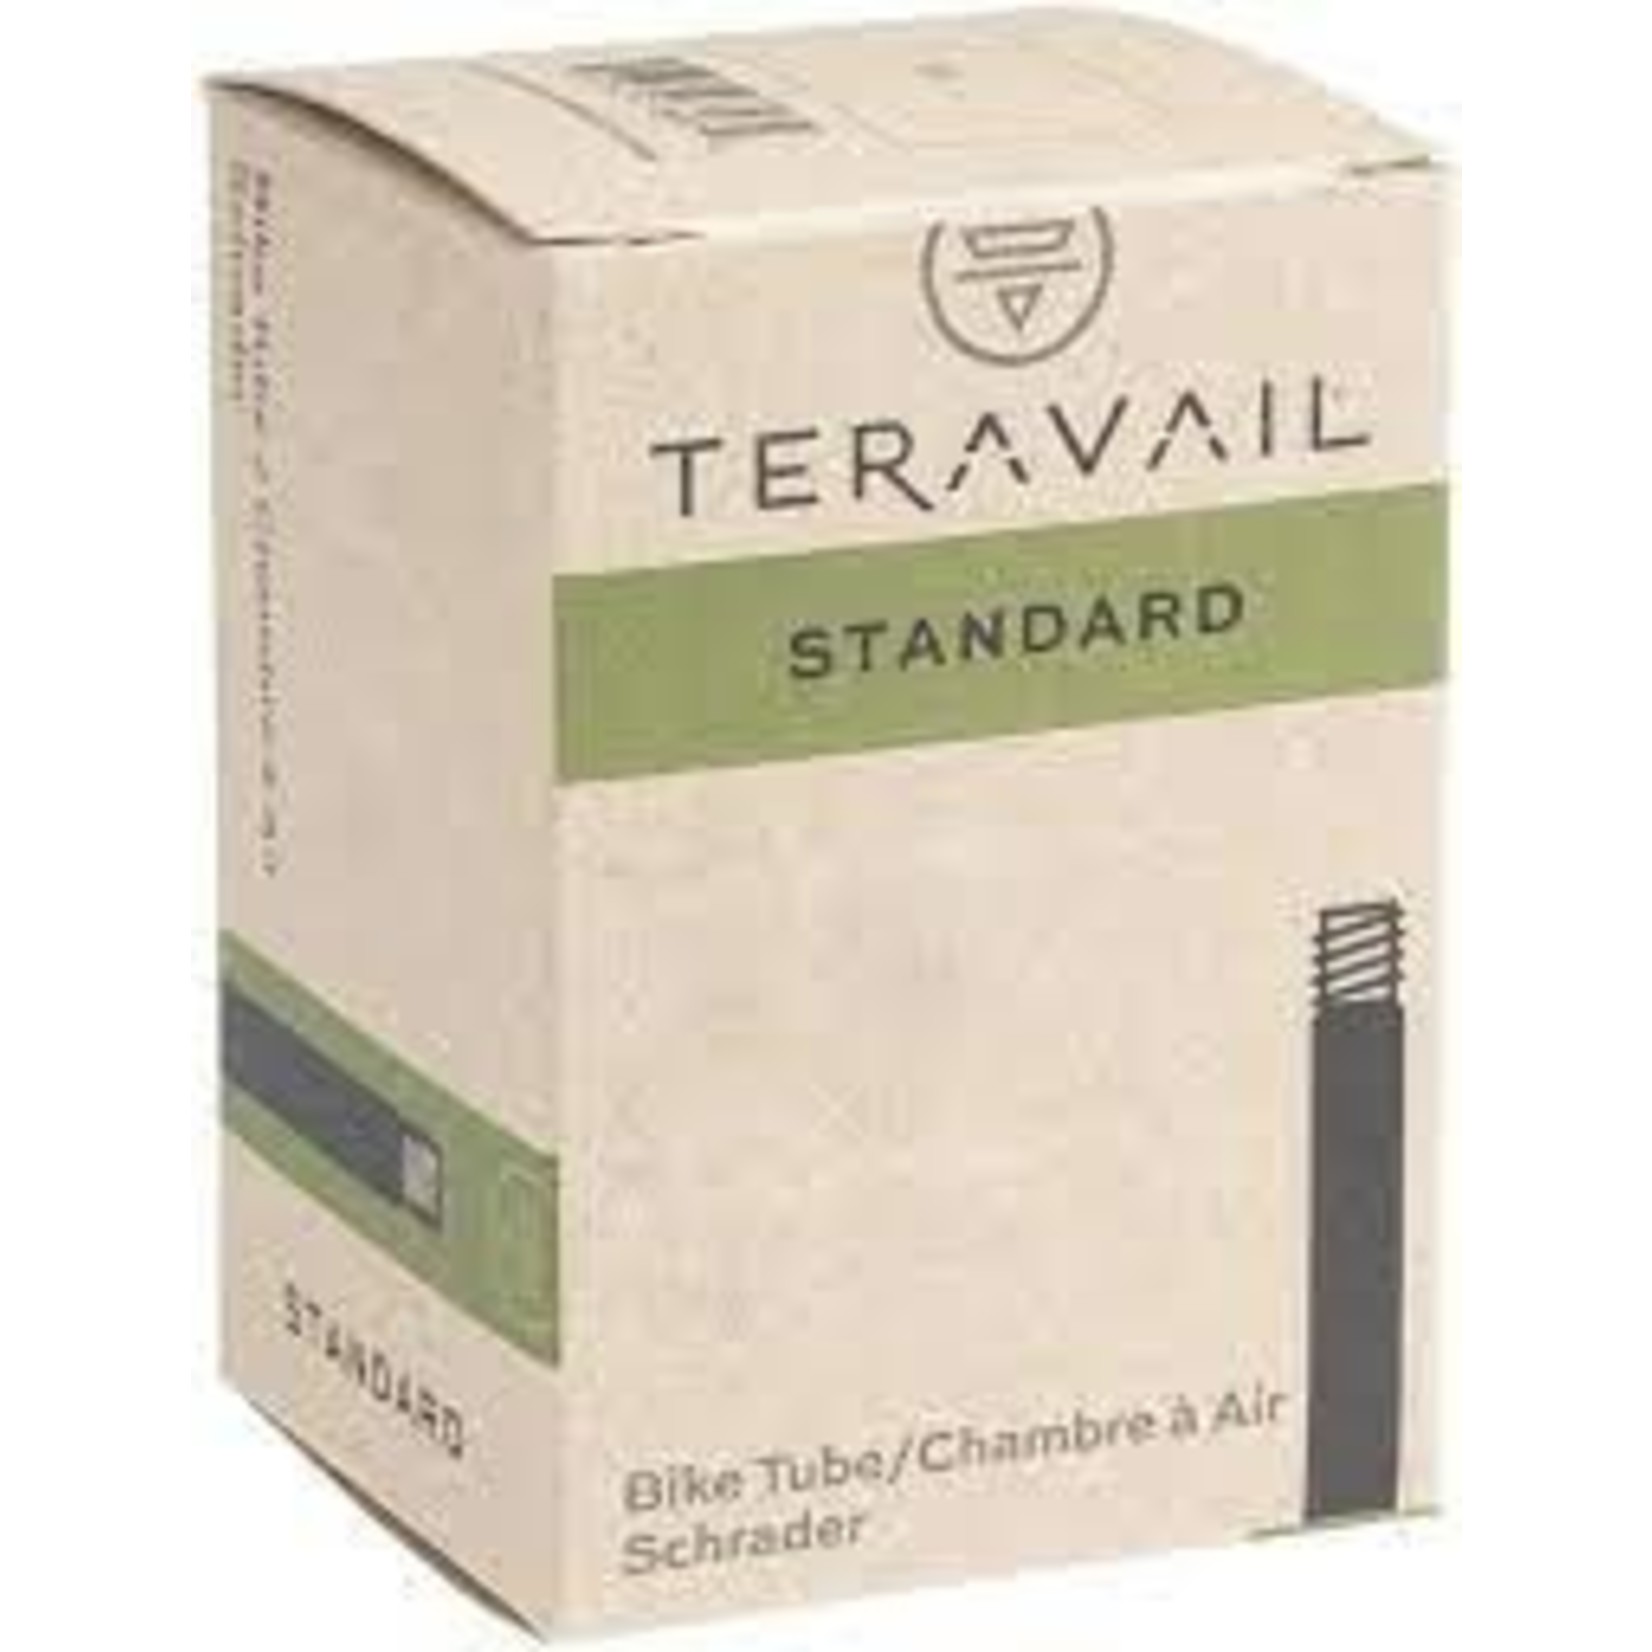 Teravail Teravail Standard Schrader Tube - 26x1.75-2.35, 48mm